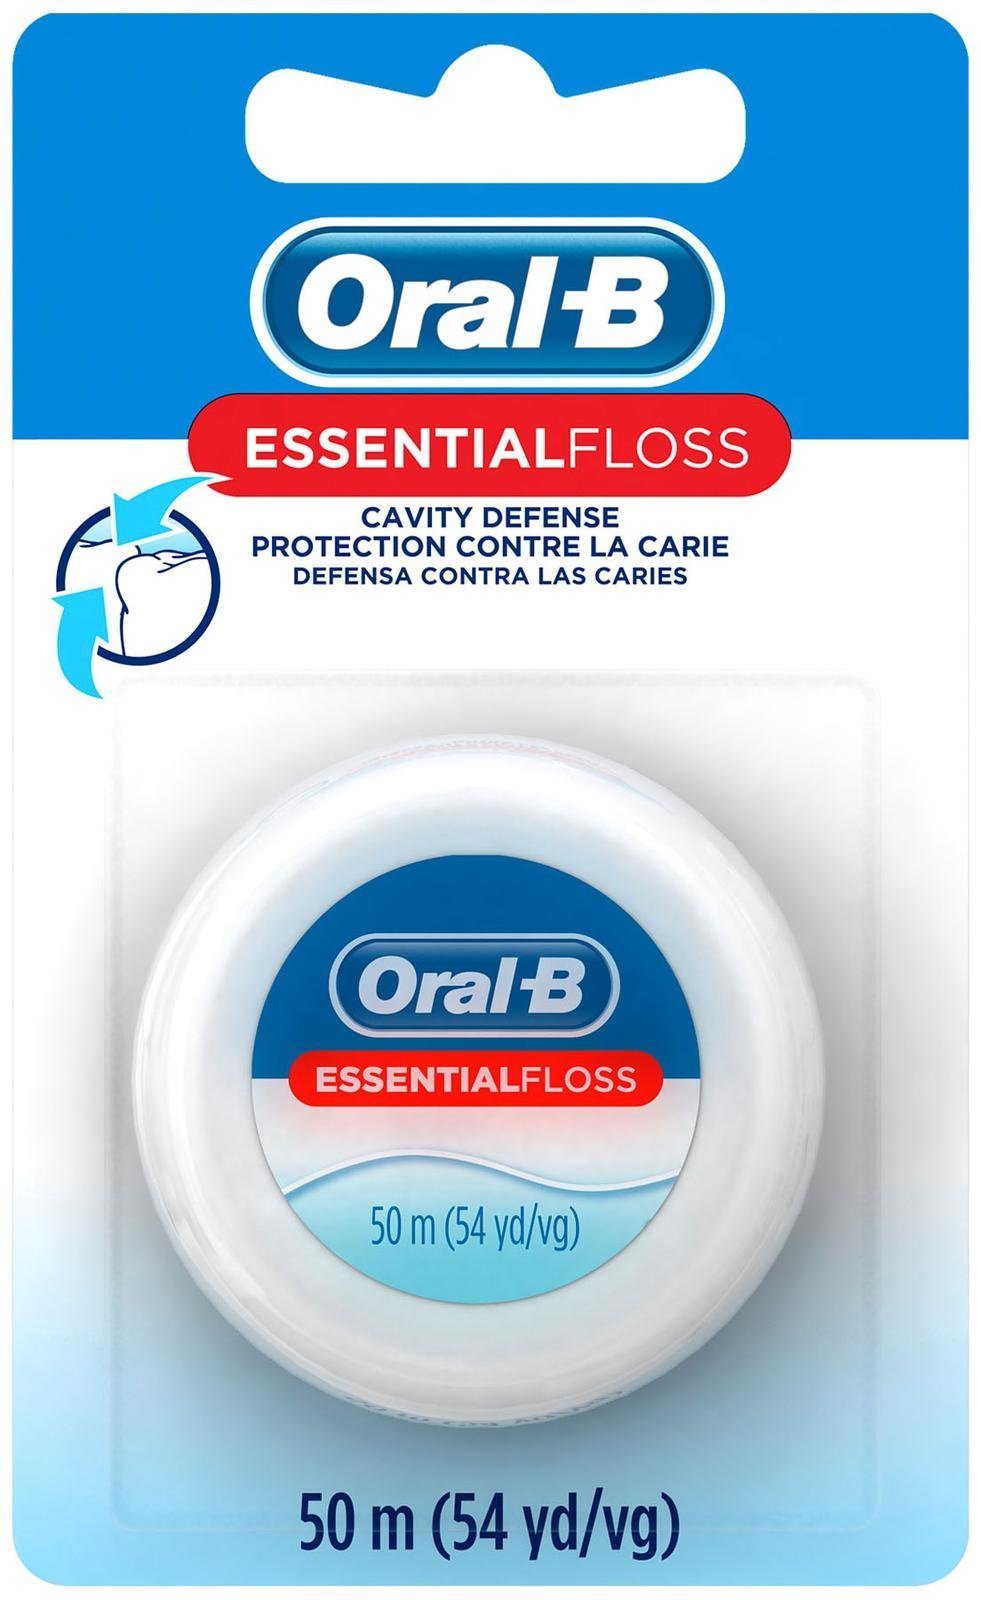 Oral B Essential Cavity Defense Floss (54 yd/vg)